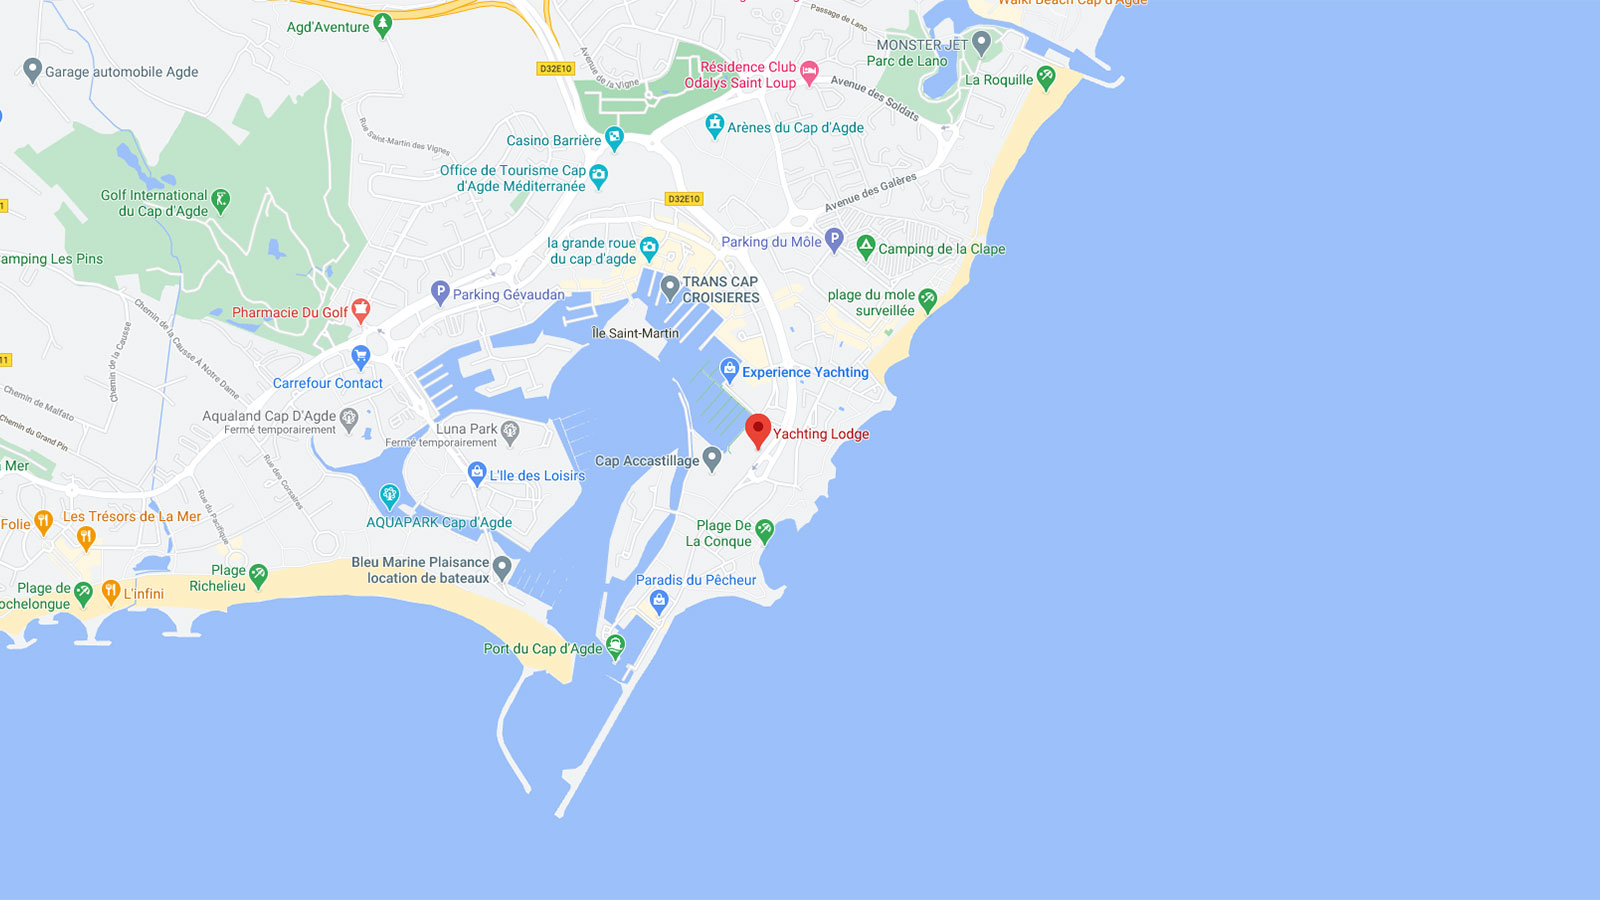 Yachting Lodge - Google Map